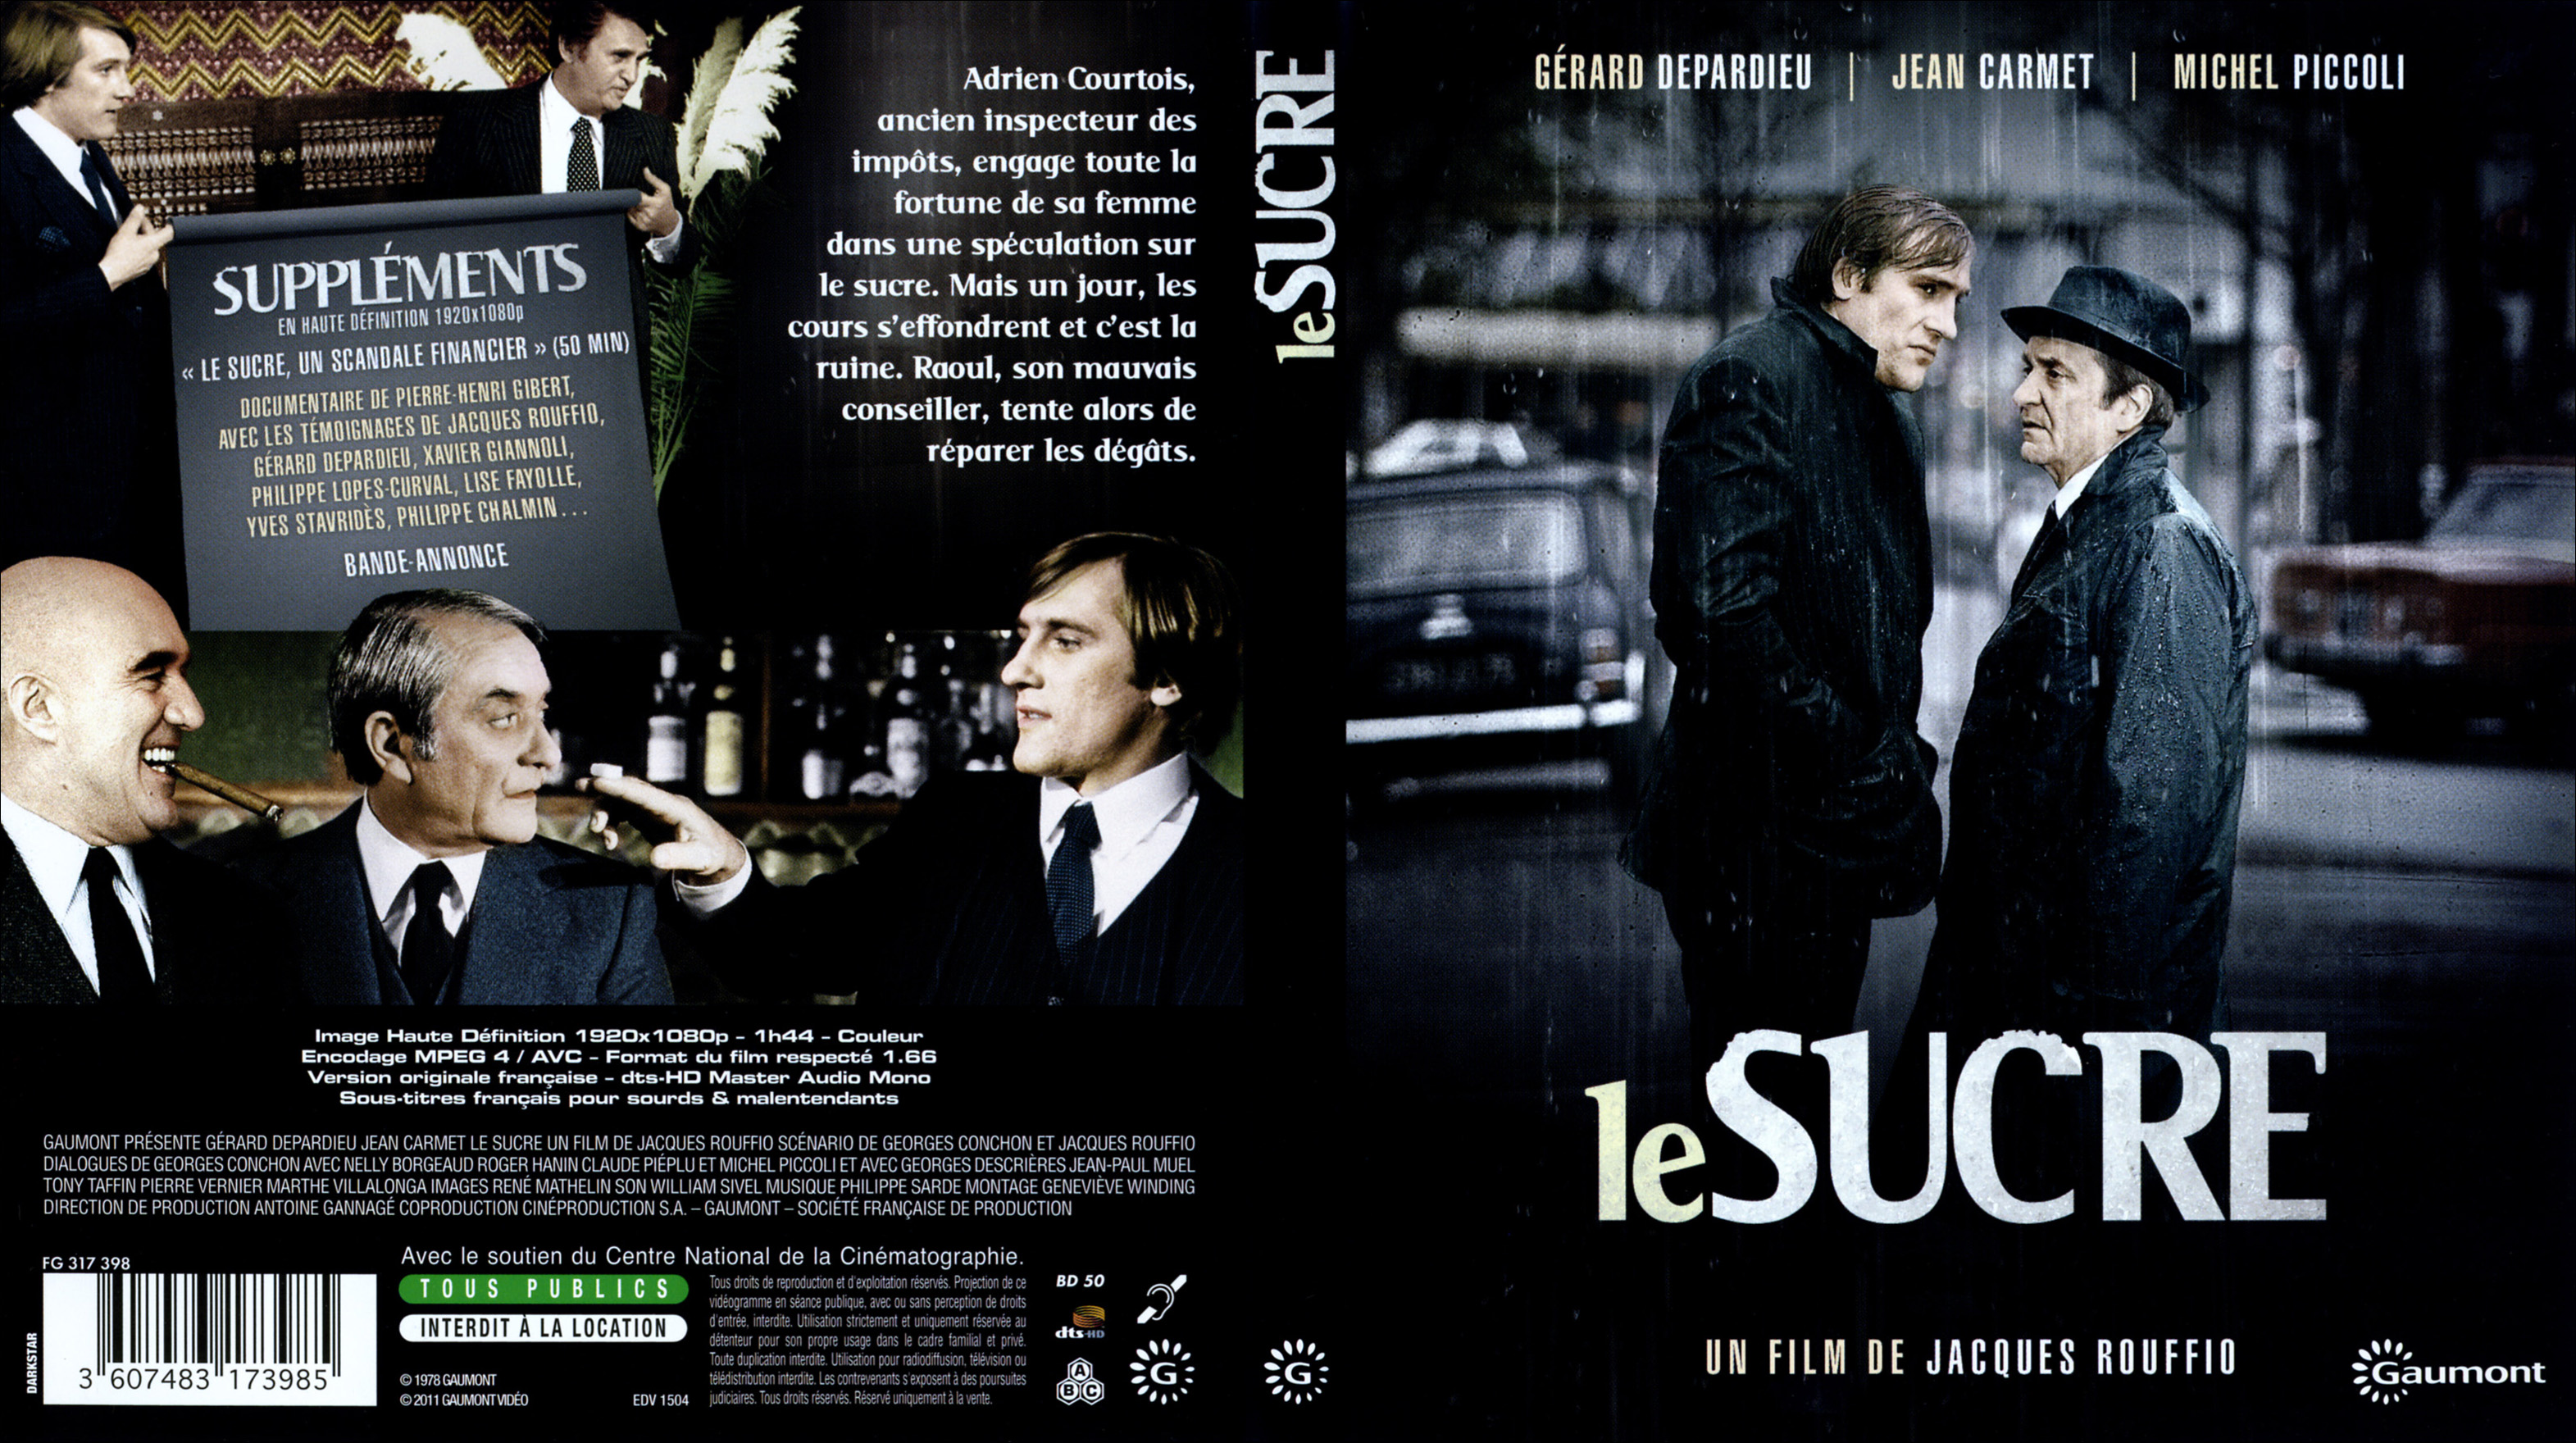 Jaquette DVD Le sucre (BLU-RAY)